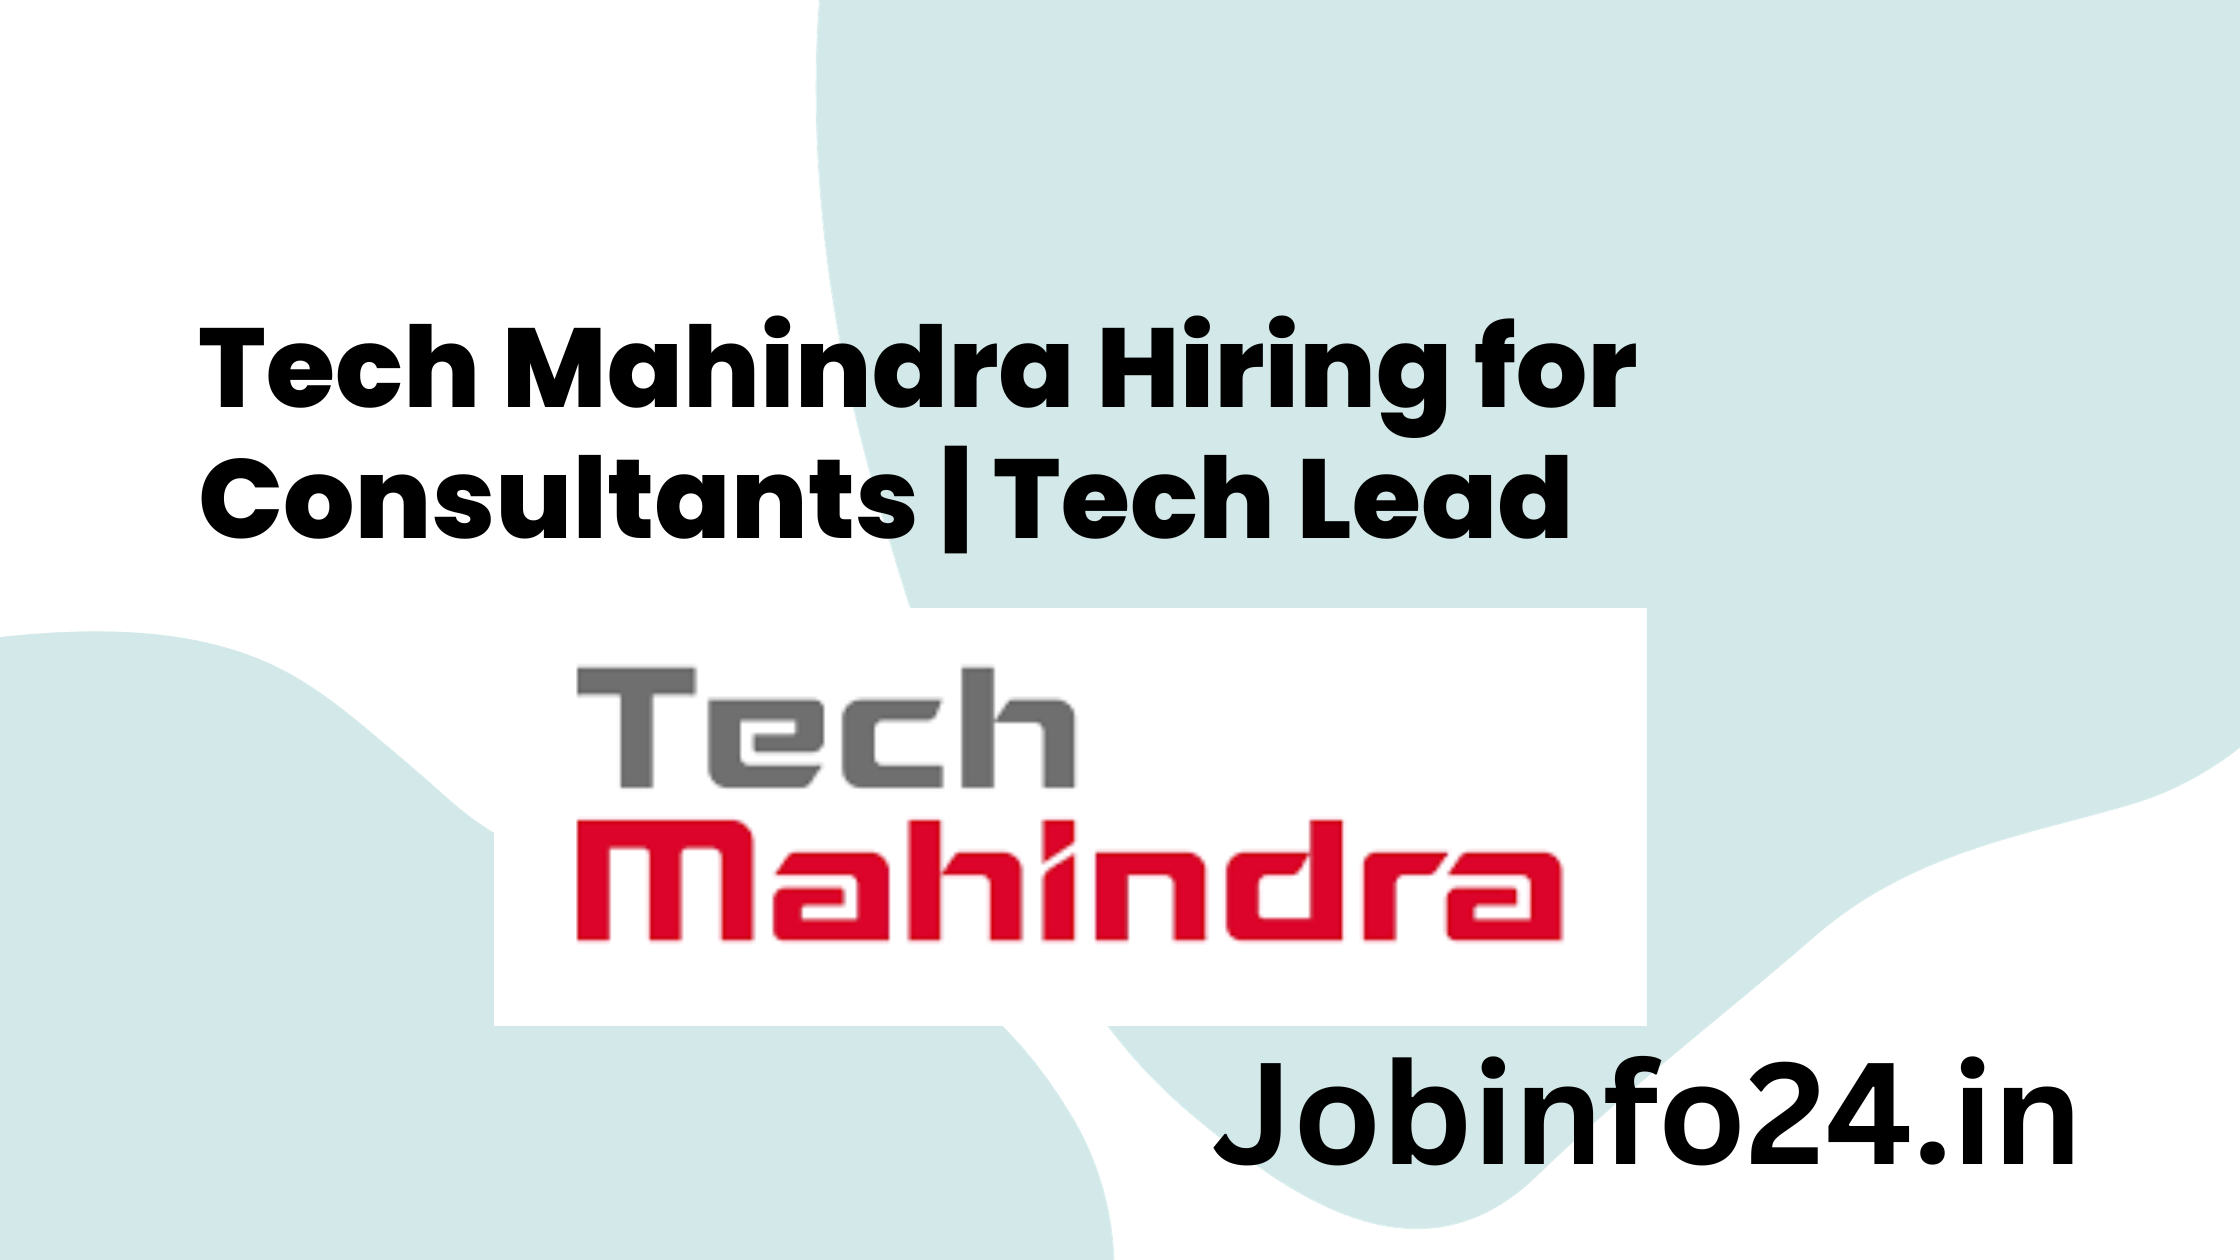 Tech Mahindra Hiring for Consultants | Tech Lead 